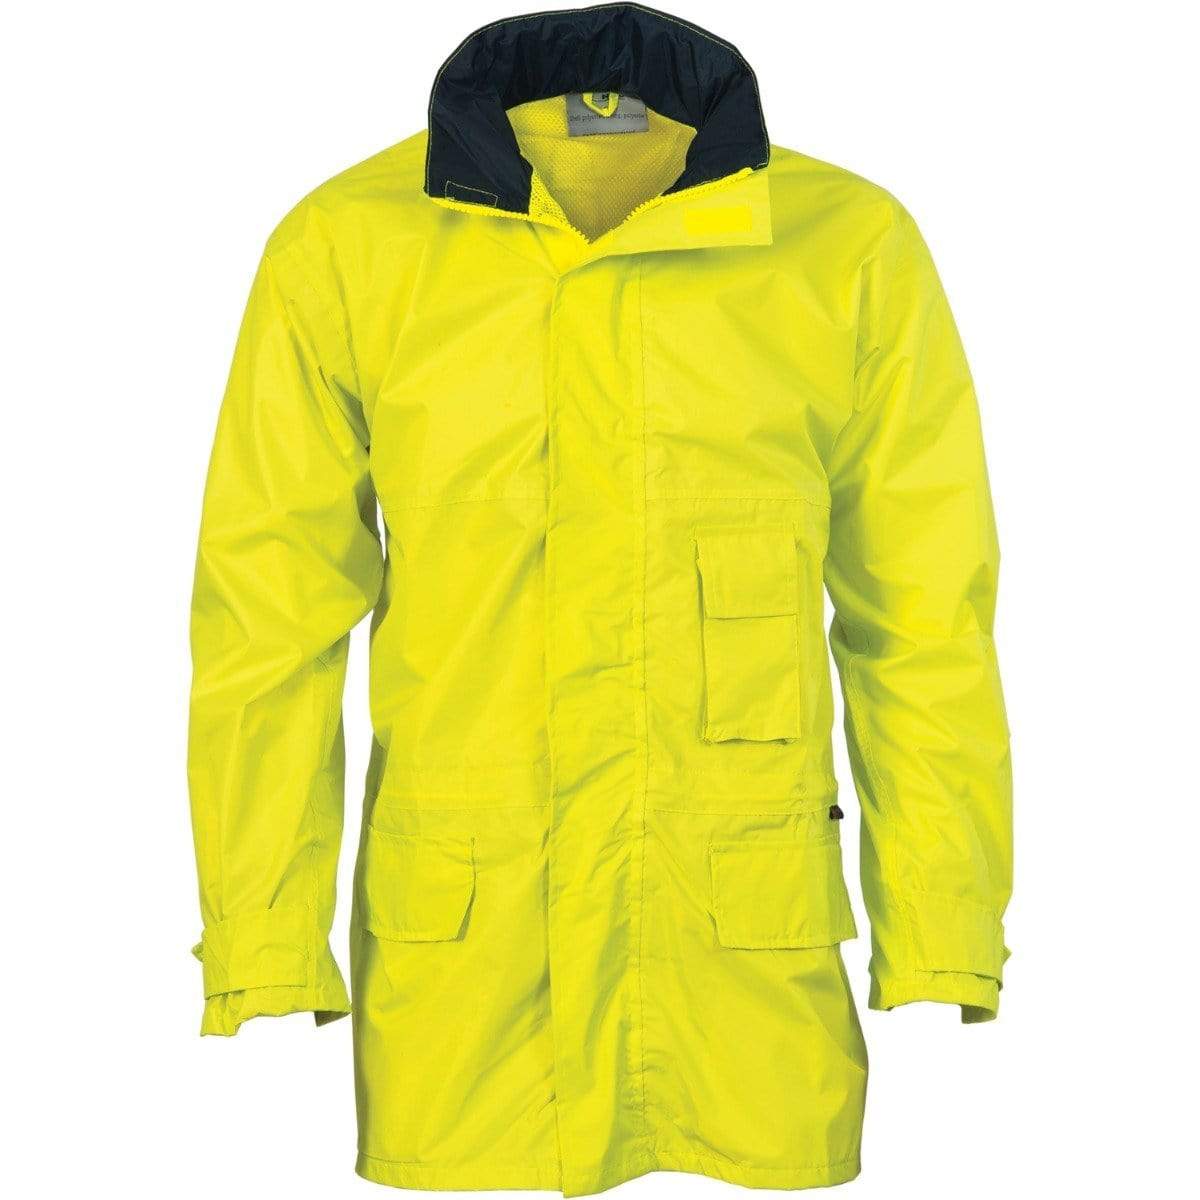 Dnc Workwear Classic Rain Jacket - 3706 Work Wear DNC Workwear Yellow 6XL 